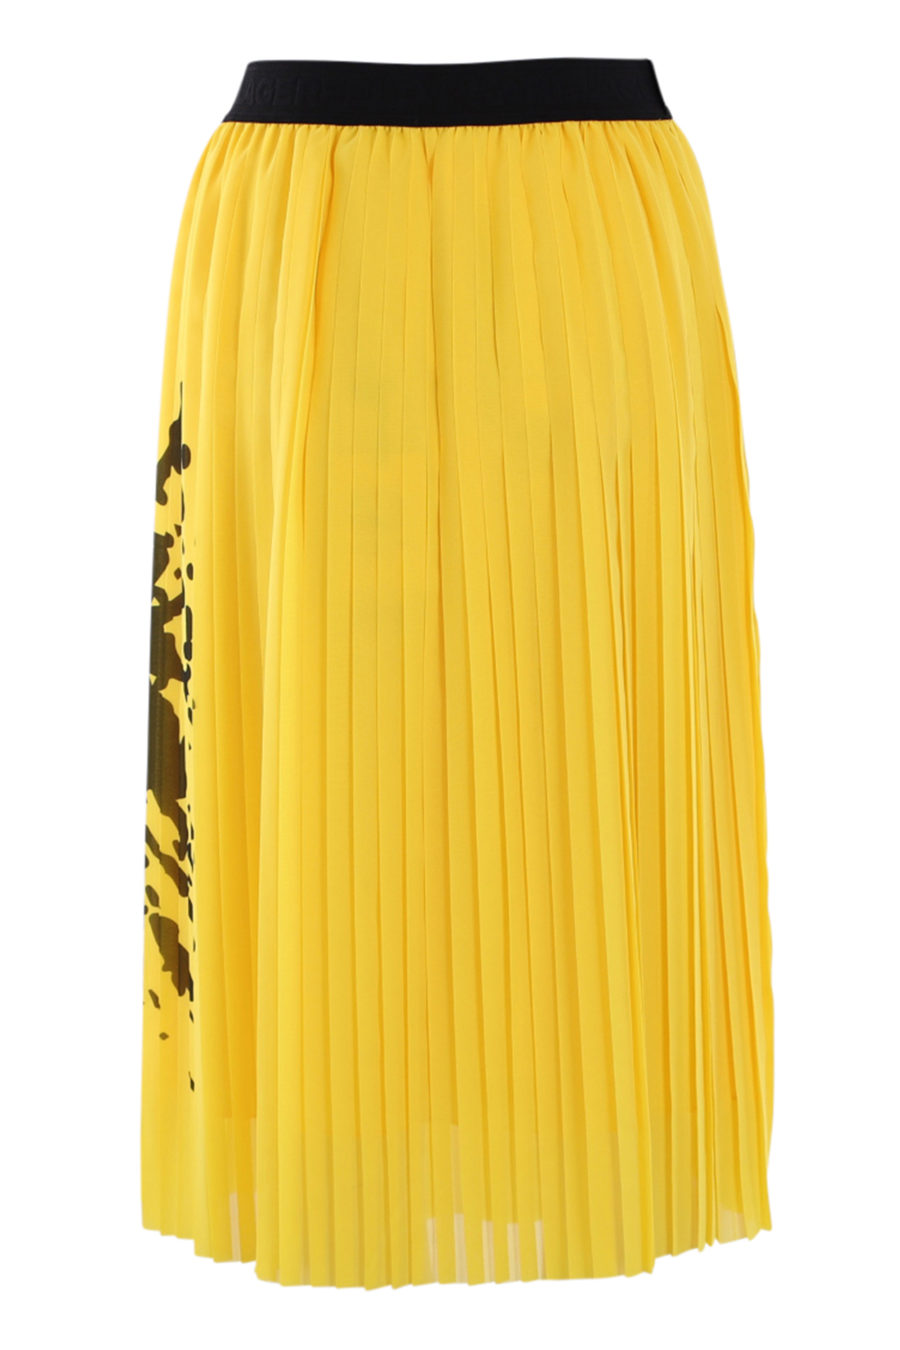 Yellow skirt with "smiley" logo - IMG 0547